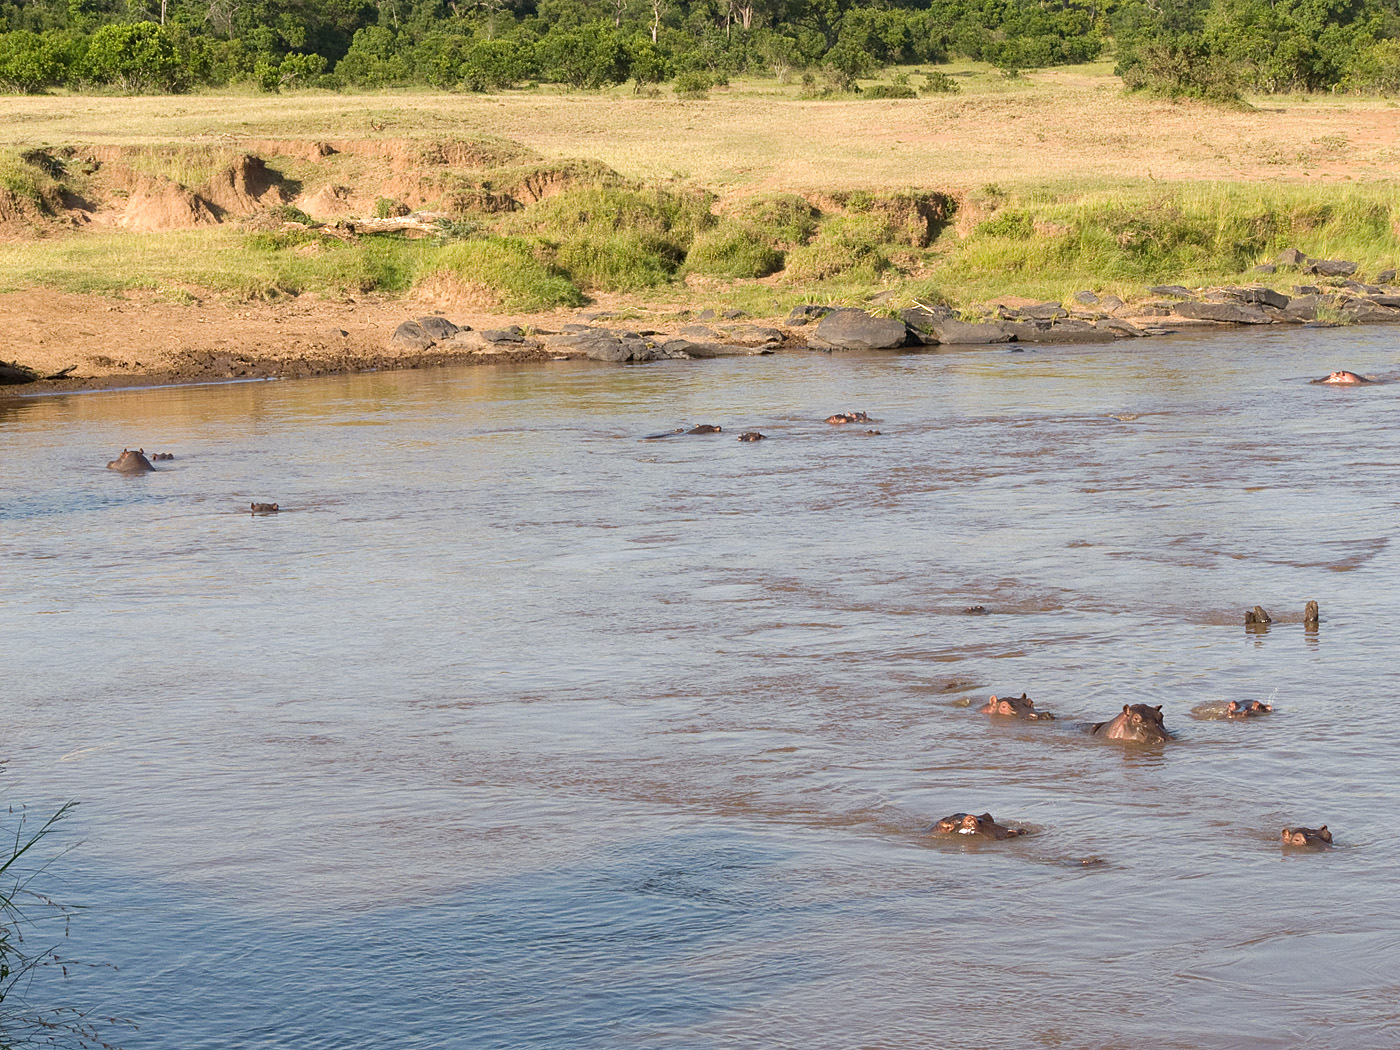 Hippos in Mara River, Mara North Conservancy